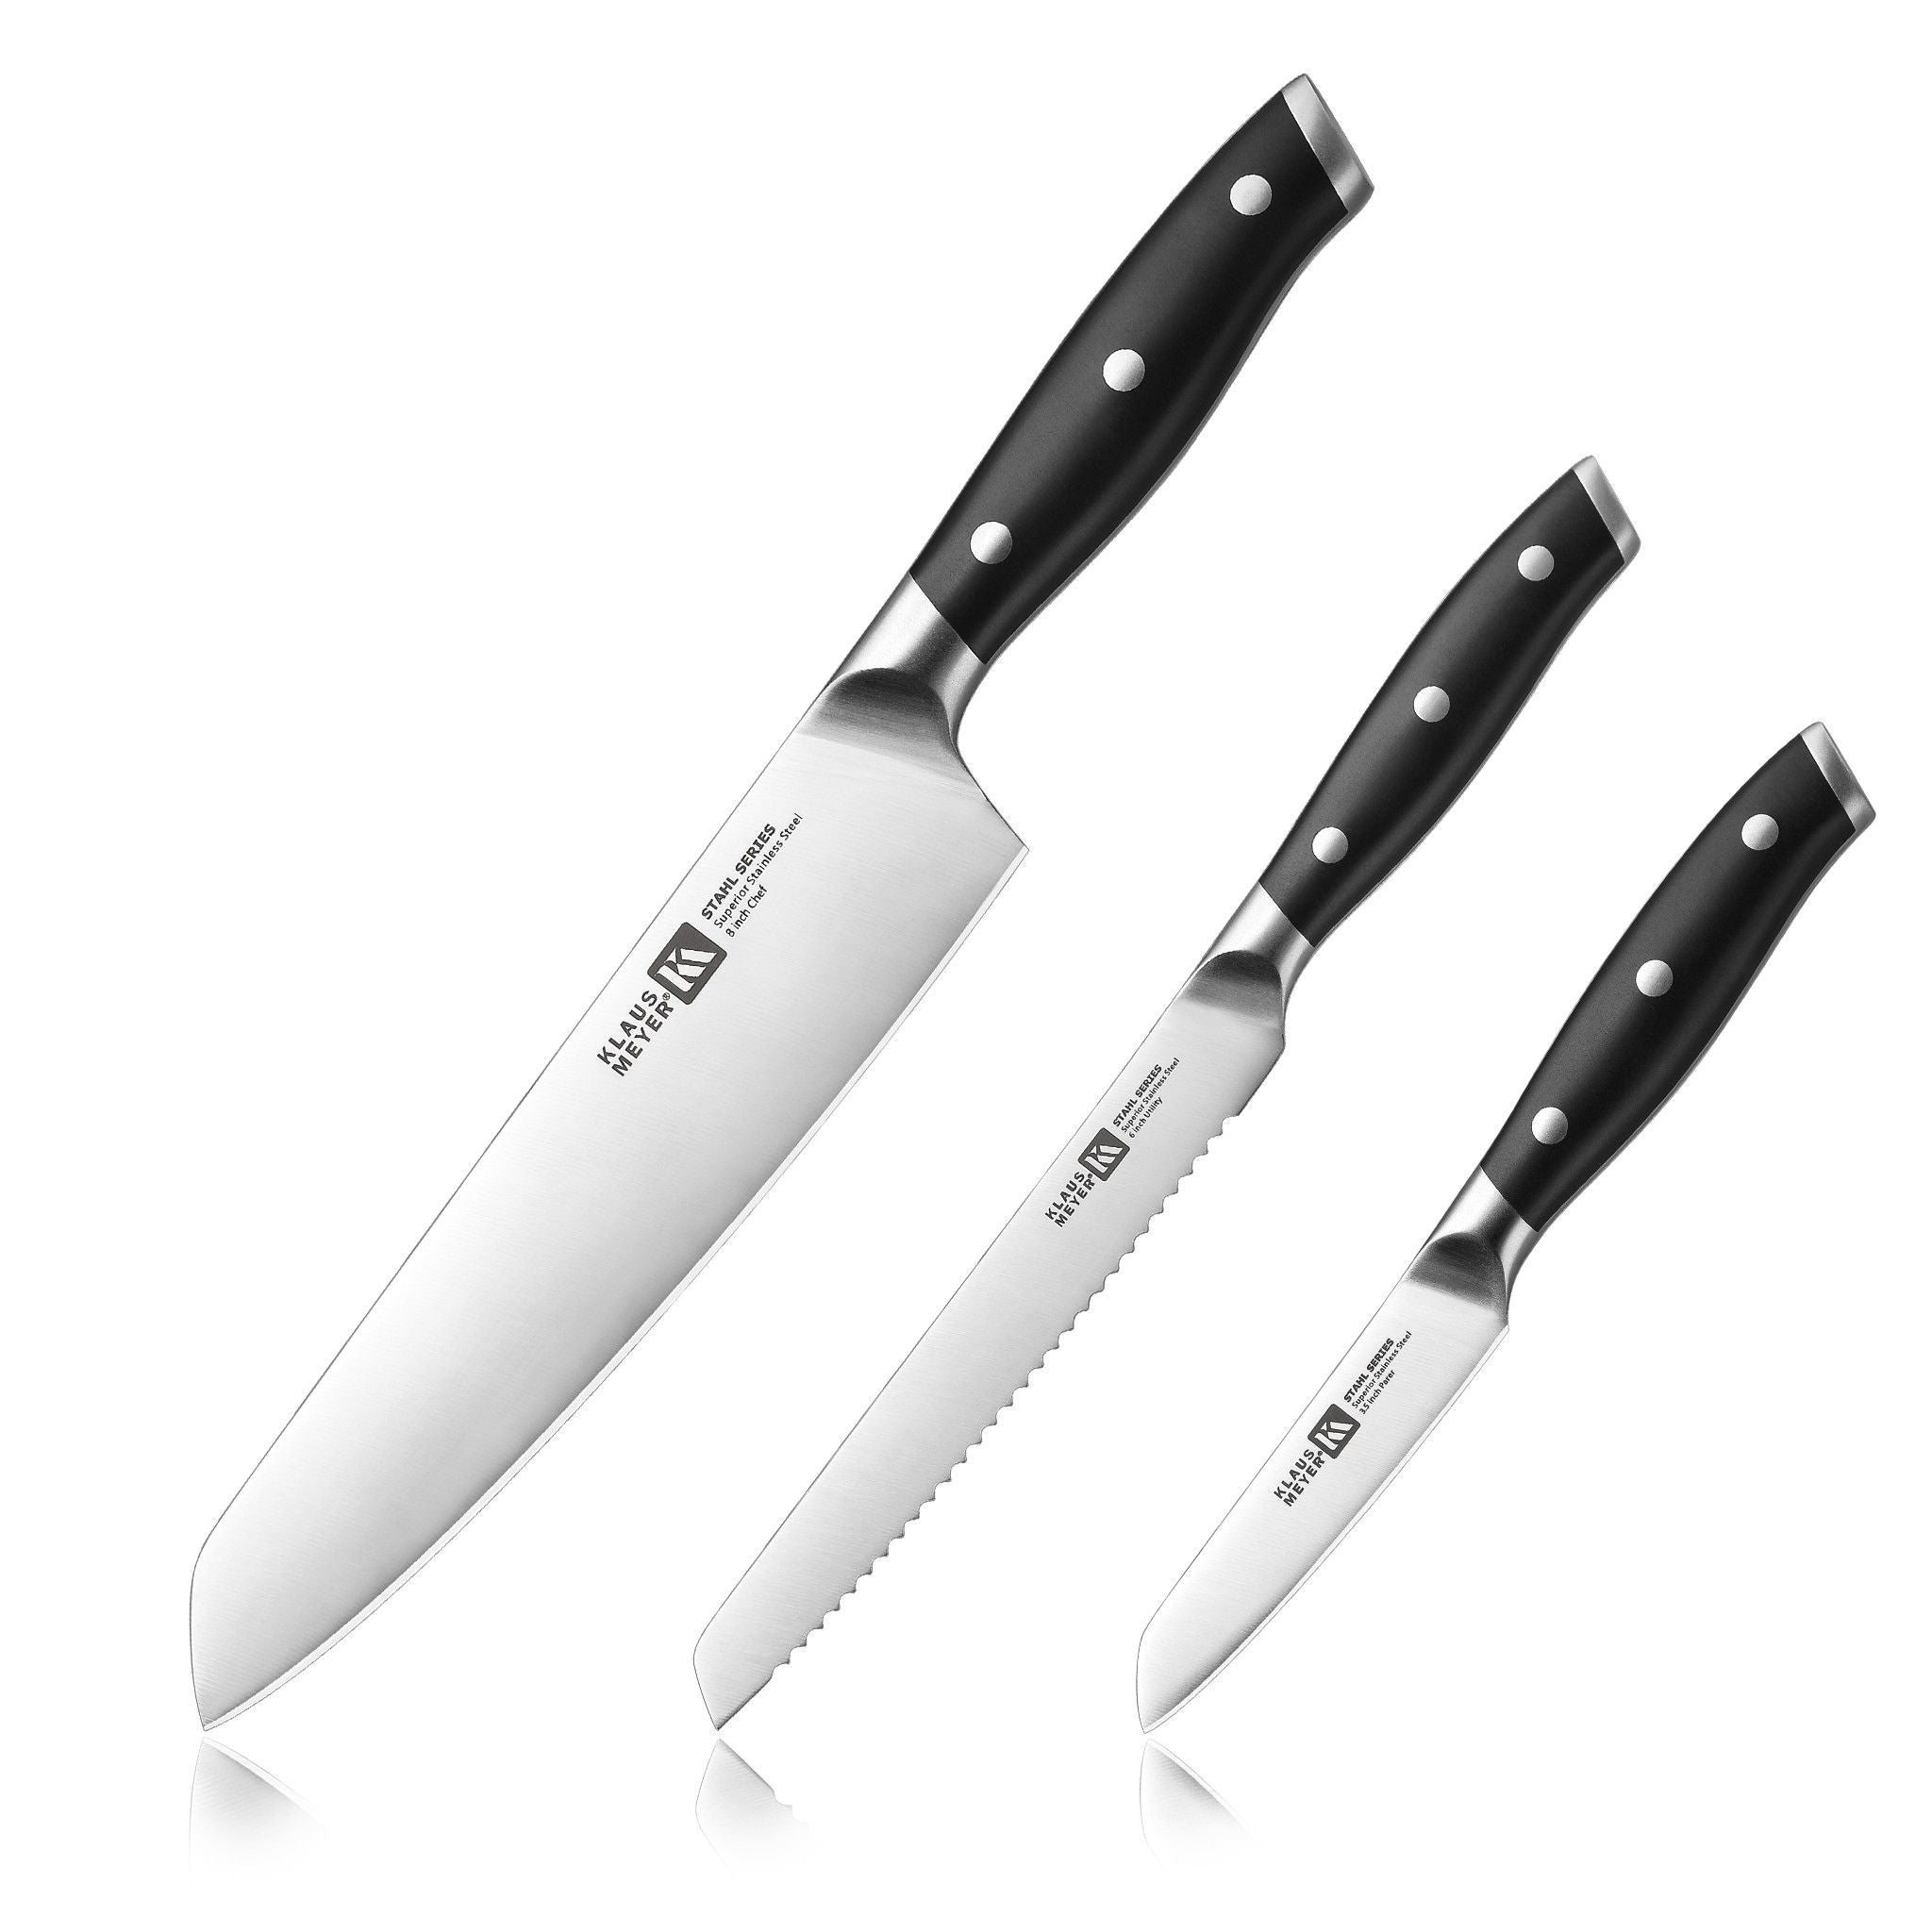 SHAN ZU German Steel Series - Superior 3PCS Chefs Knife Set